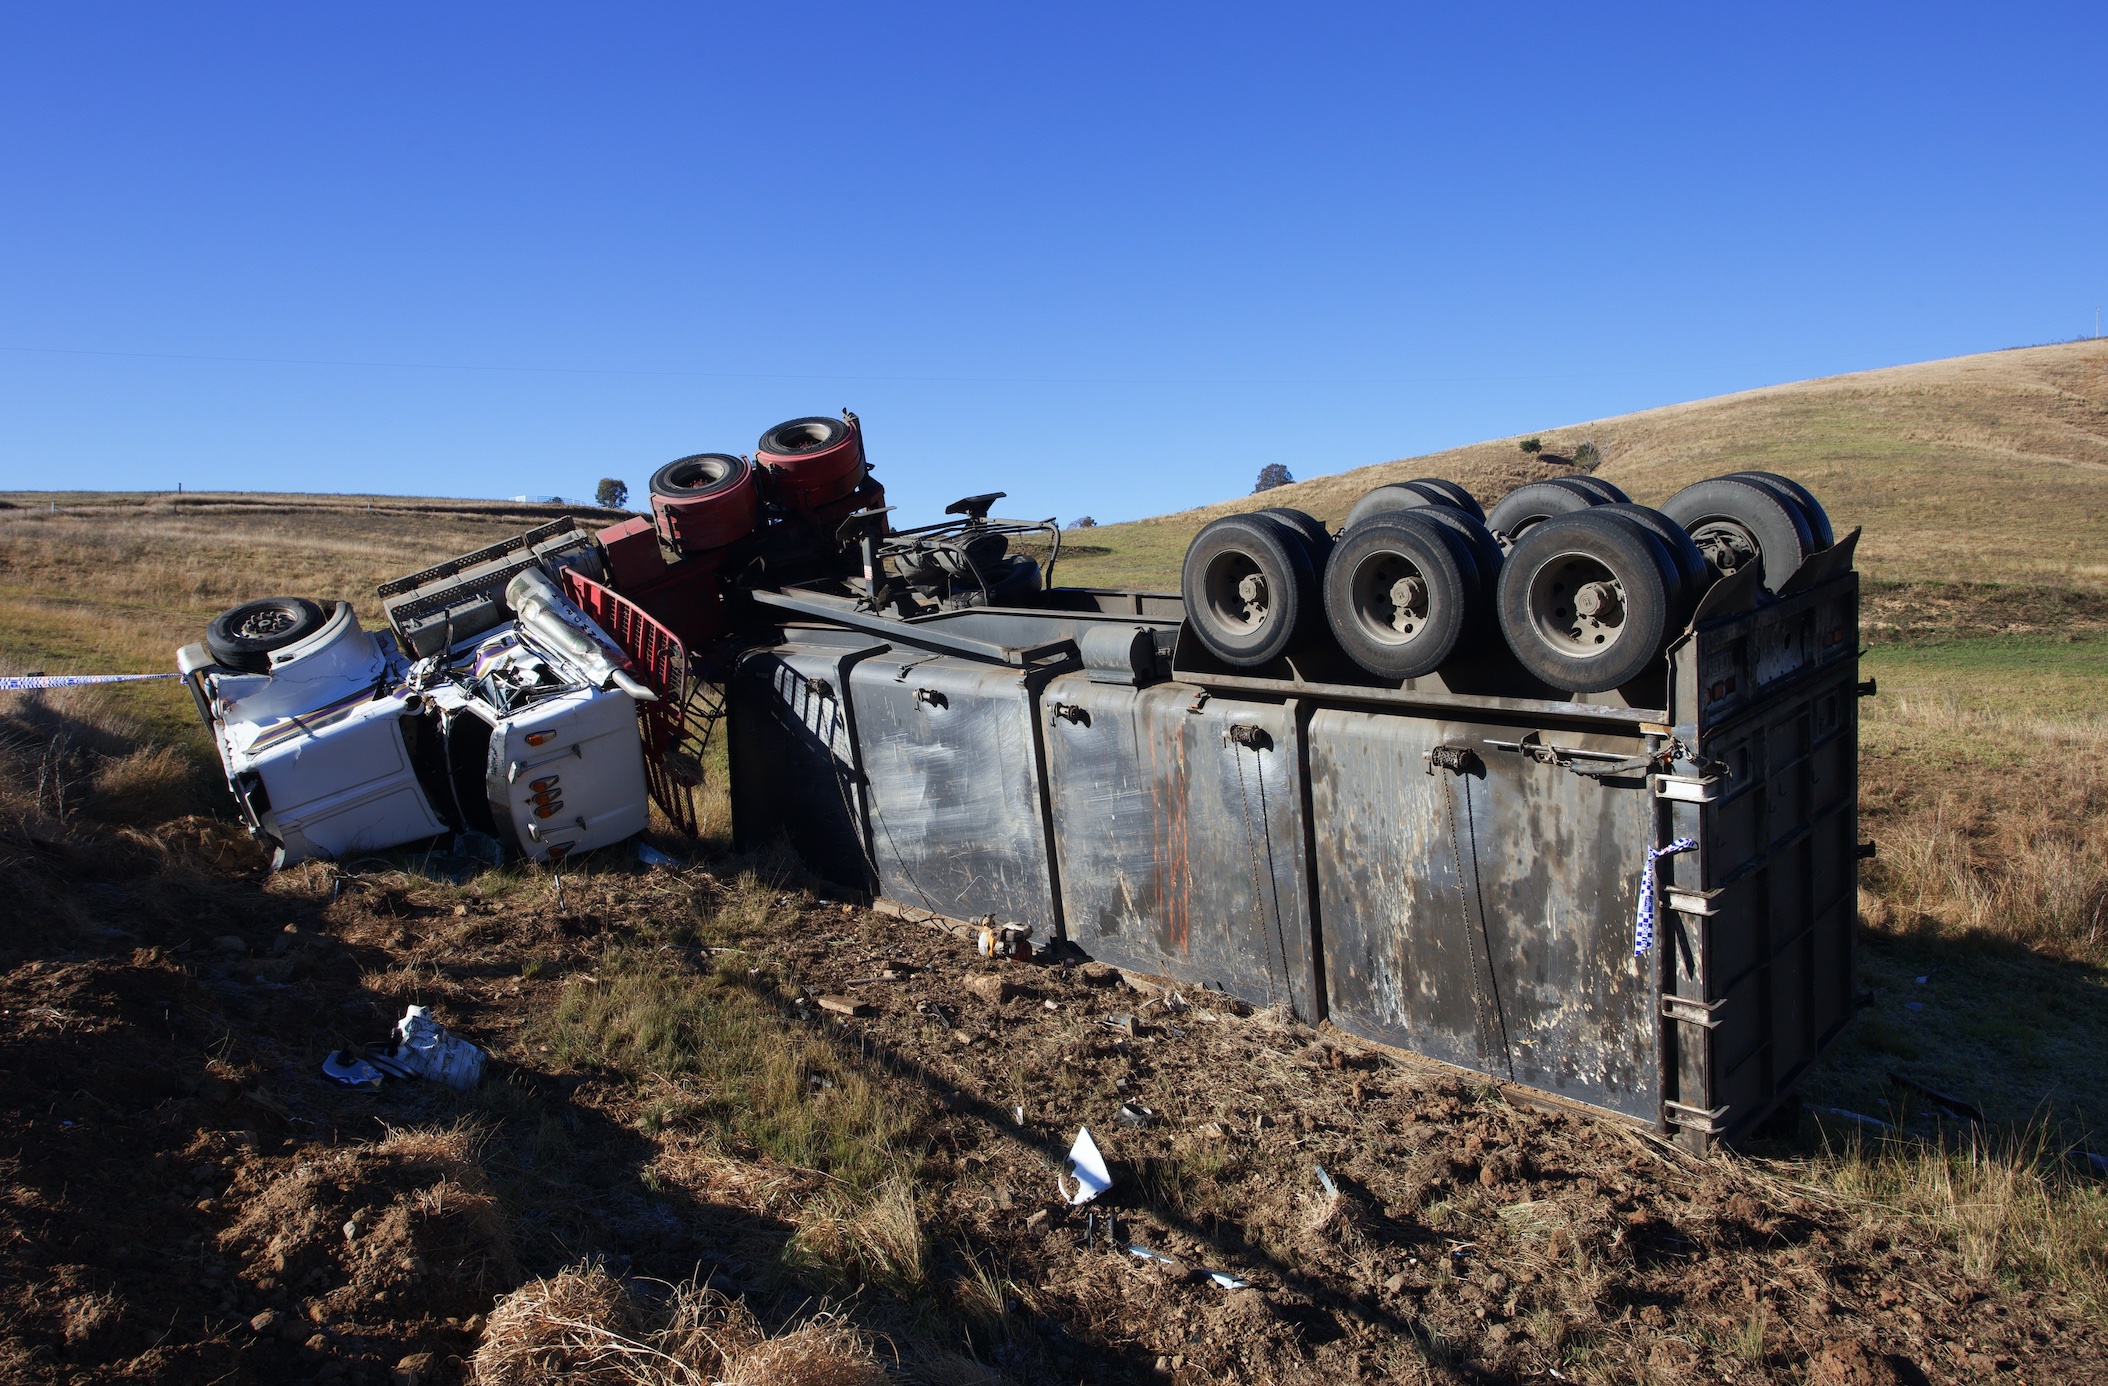 Semi-truck rolled over; image by Stephen Tafra, via Unsplash.com.